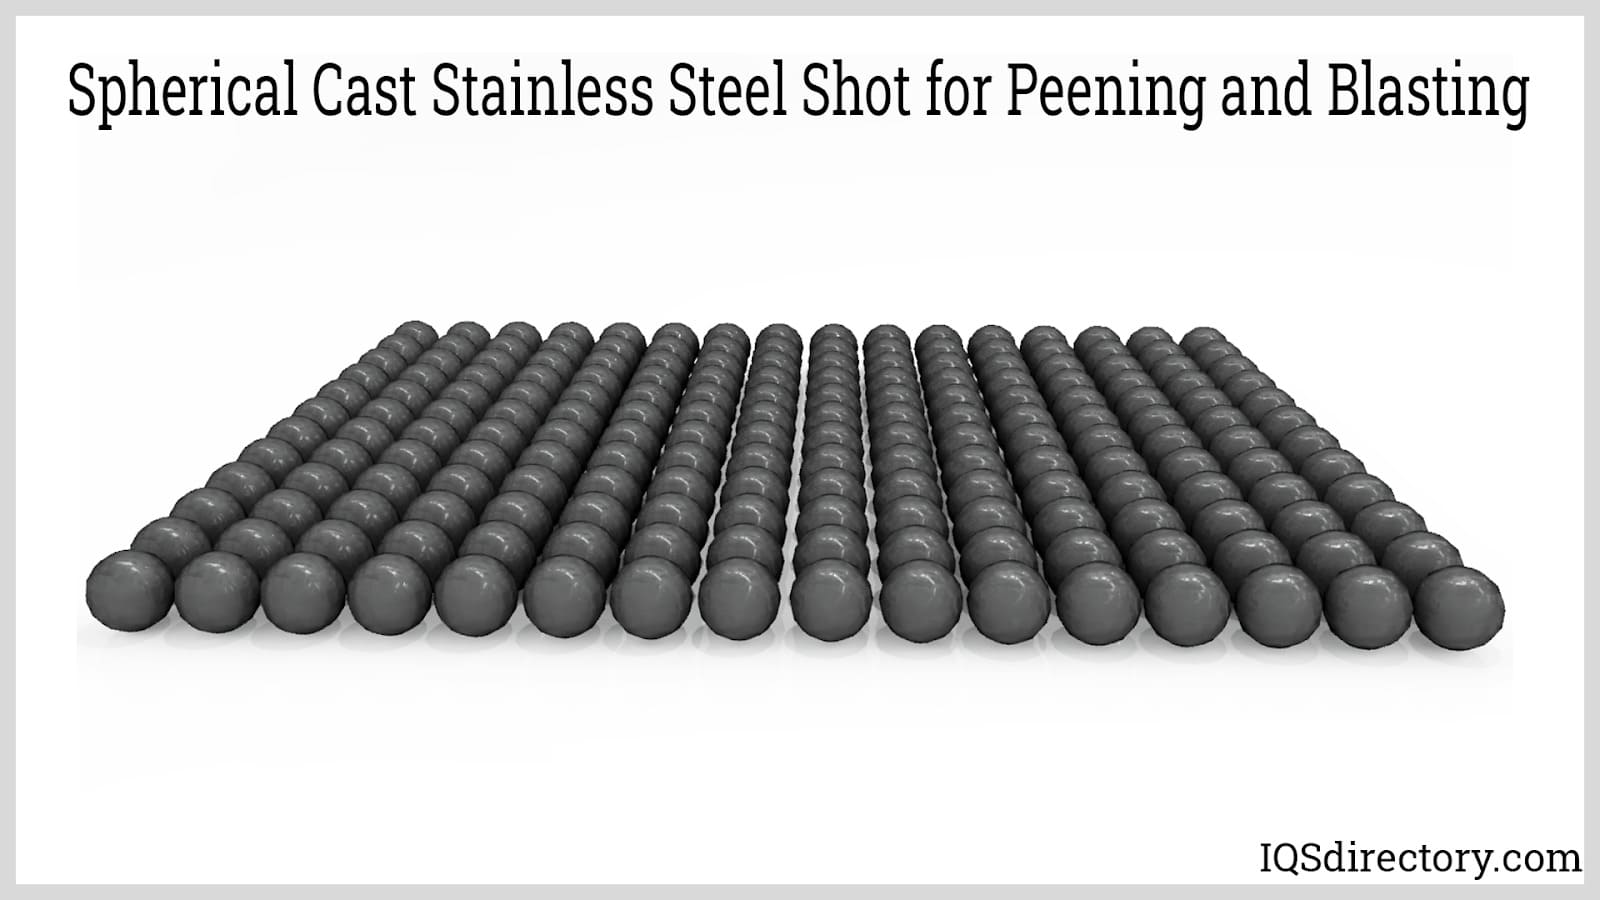 Spherical Cast Stainless Steel Shot for Peening and Blasting